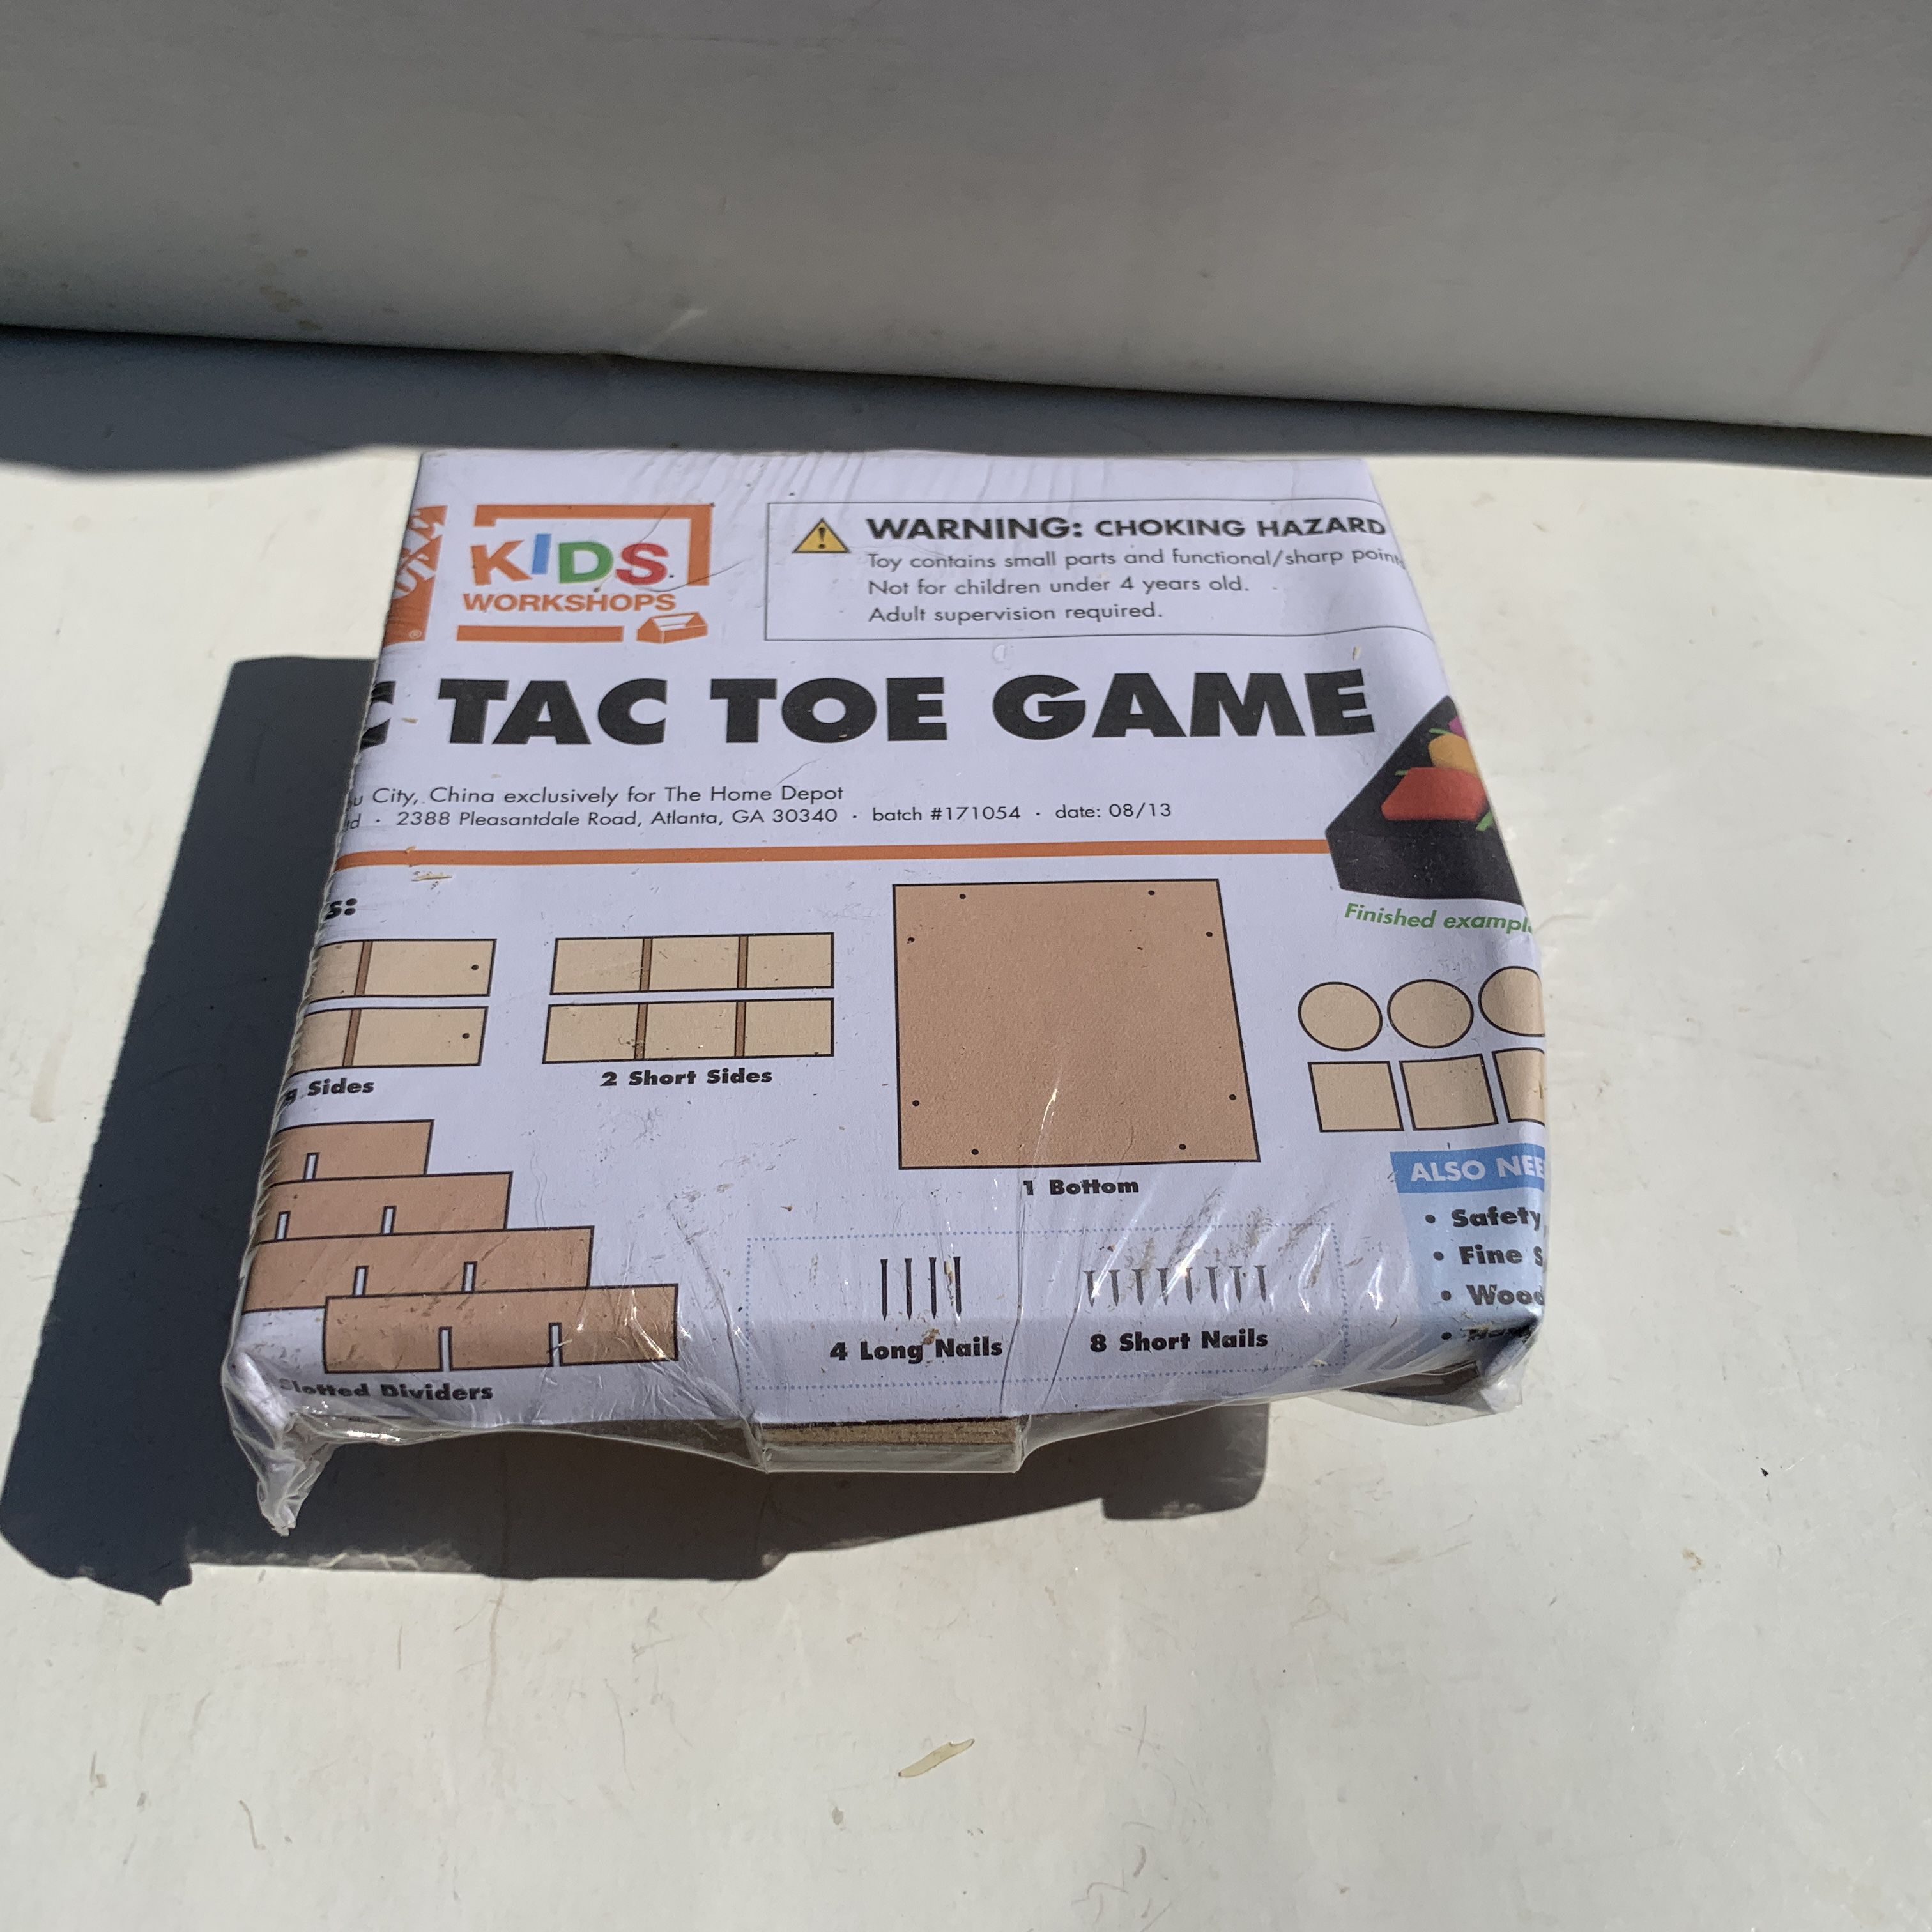 Tic Tac Toe Wood Game Kit, Kids Workshop, The Home Depot